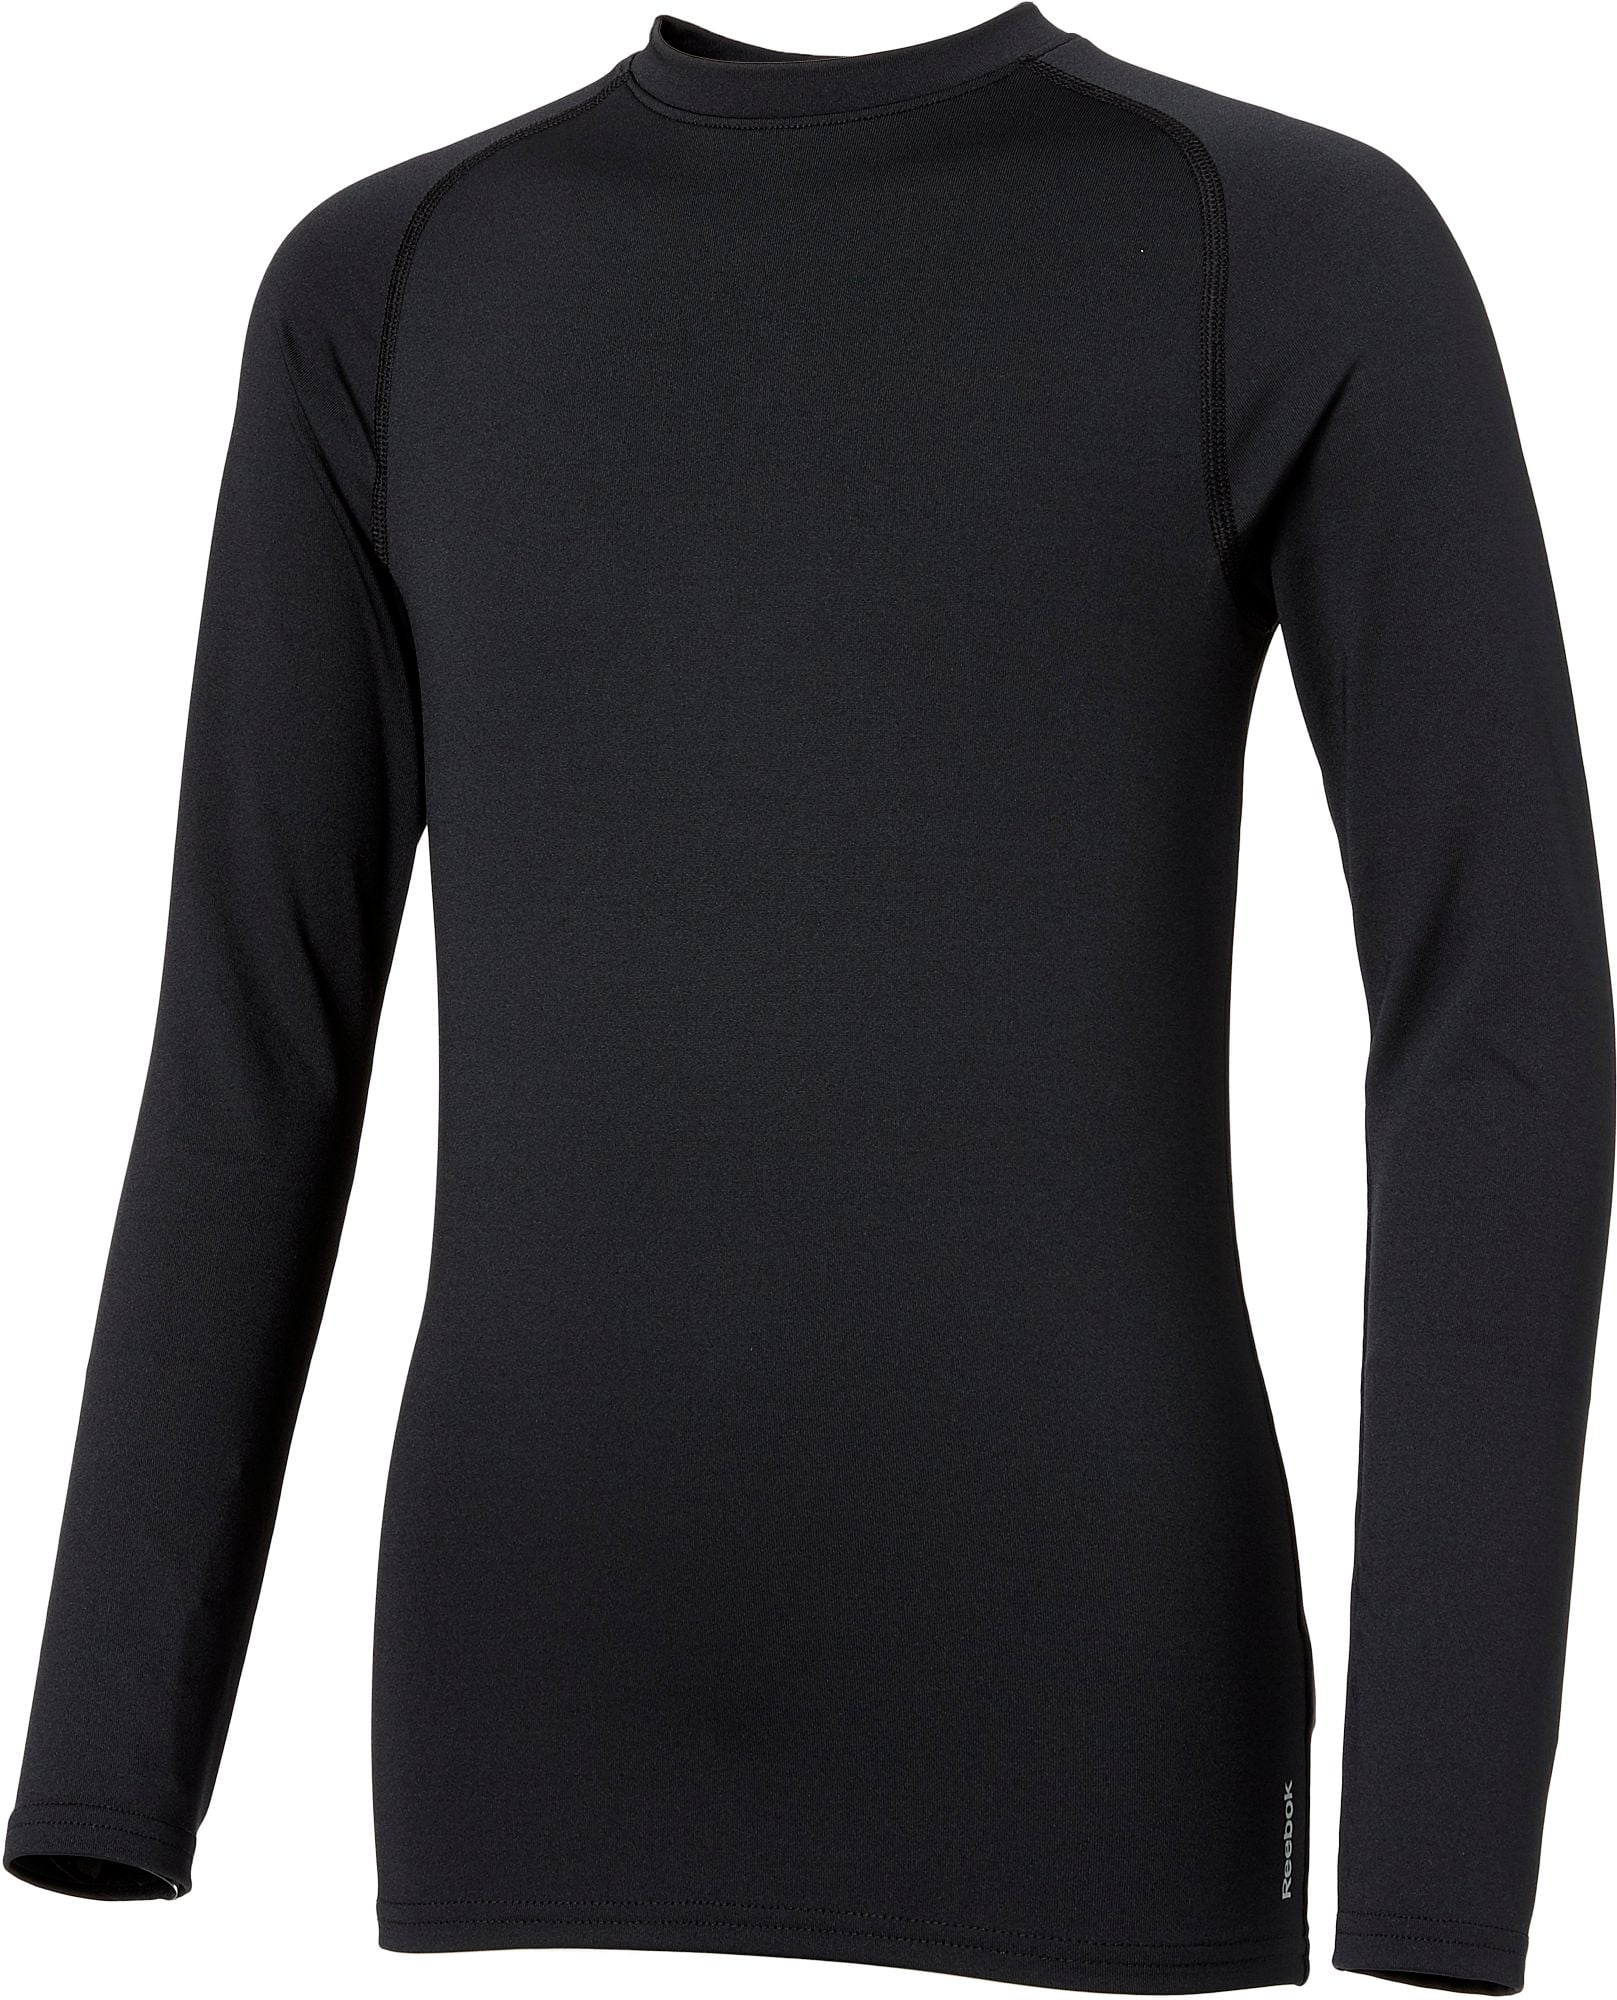 reebok men's cold weather compression novelty long sleeve shirt